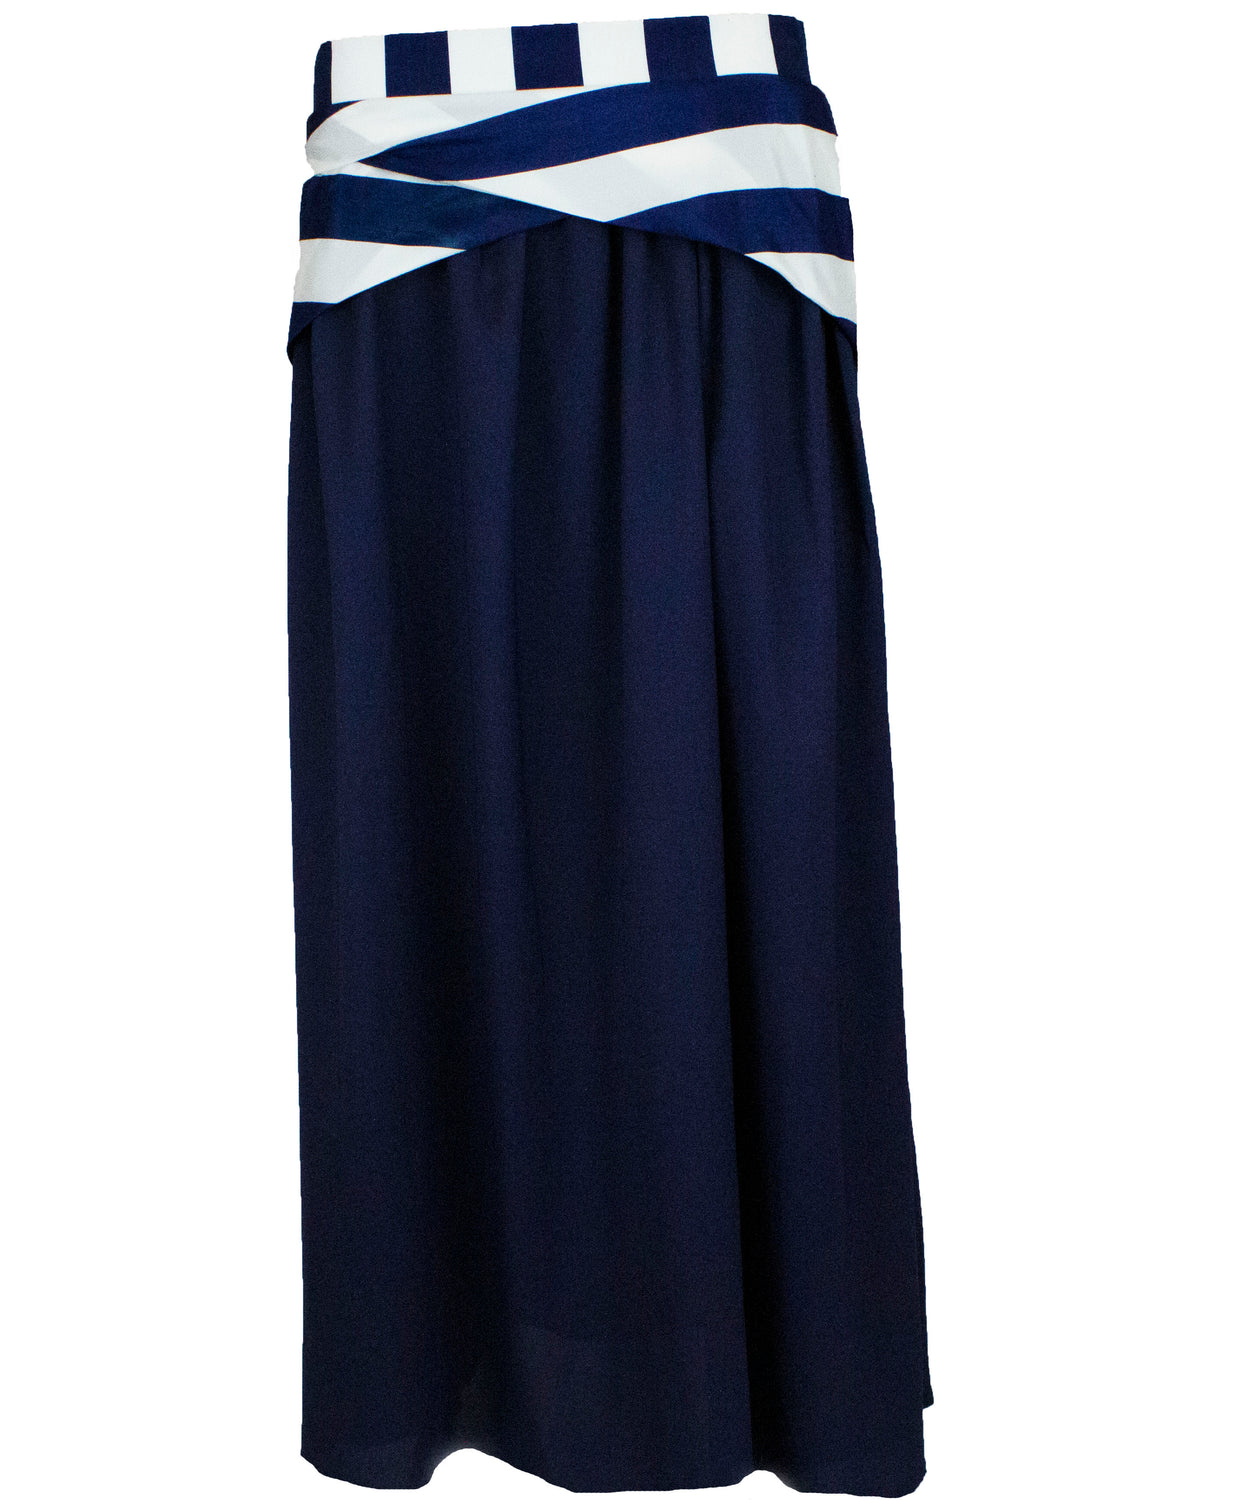 dark navy blue skirt with satin stripes along the waist